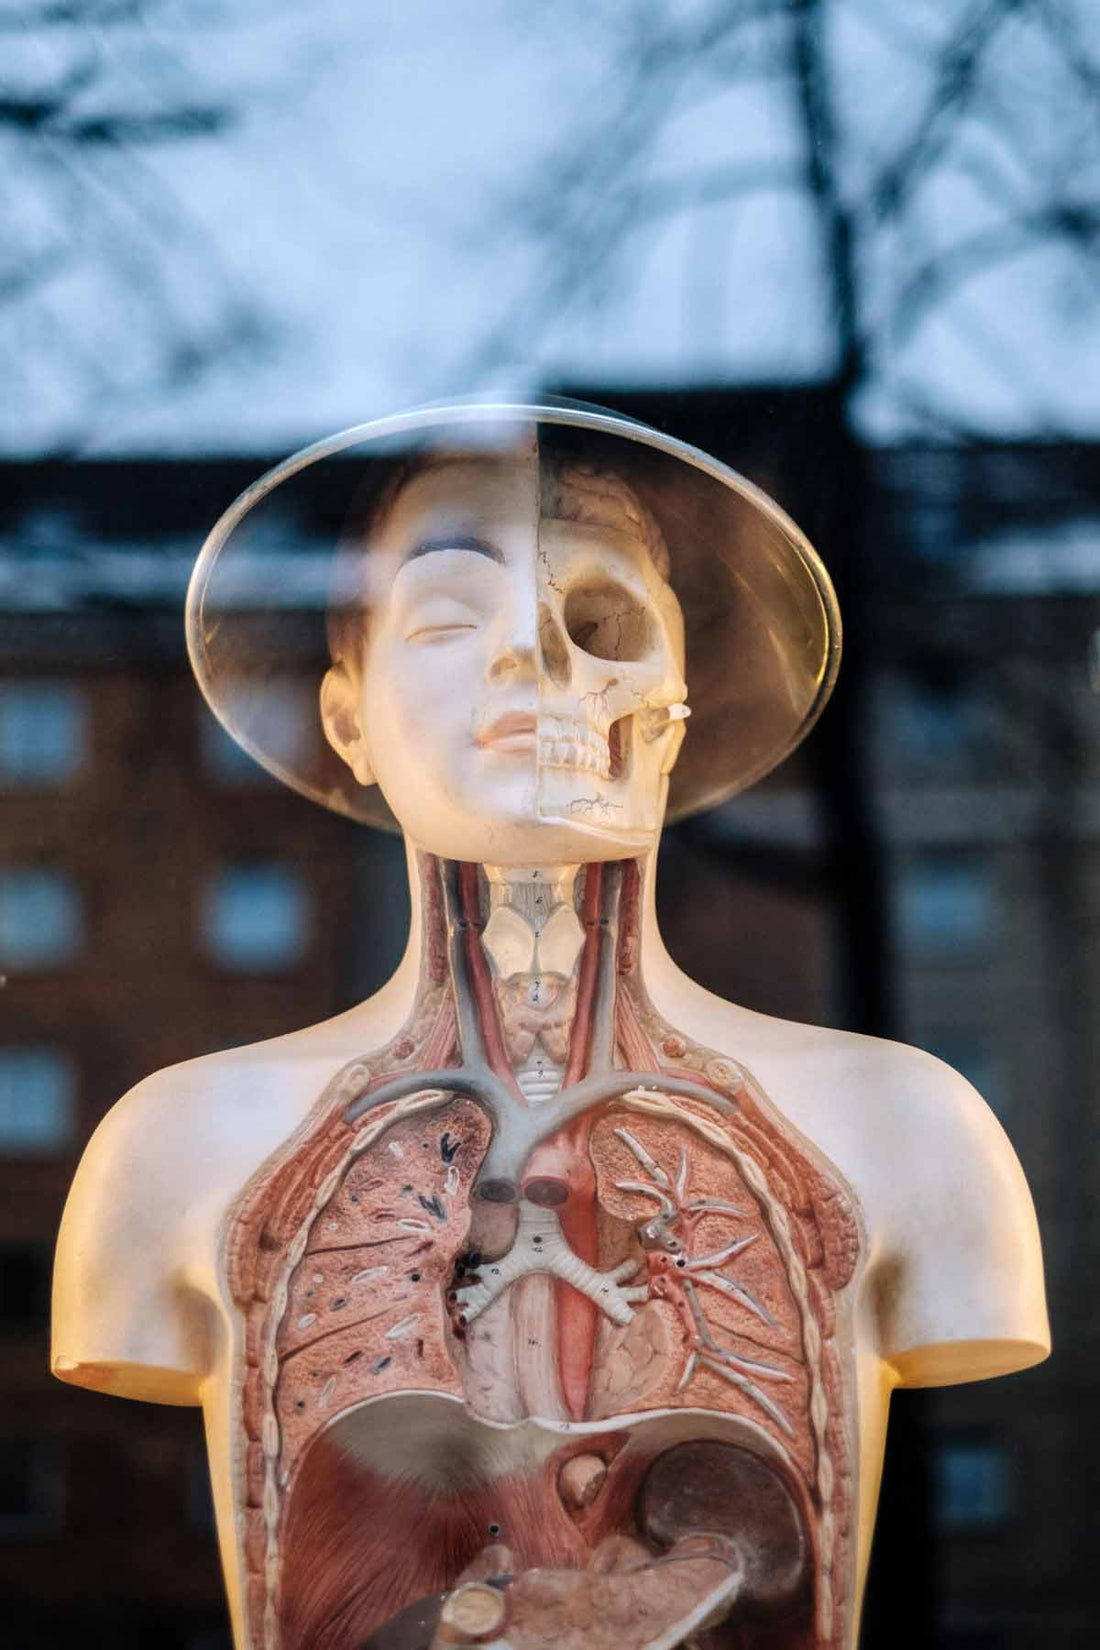 Mannequin showing internal human anatomy